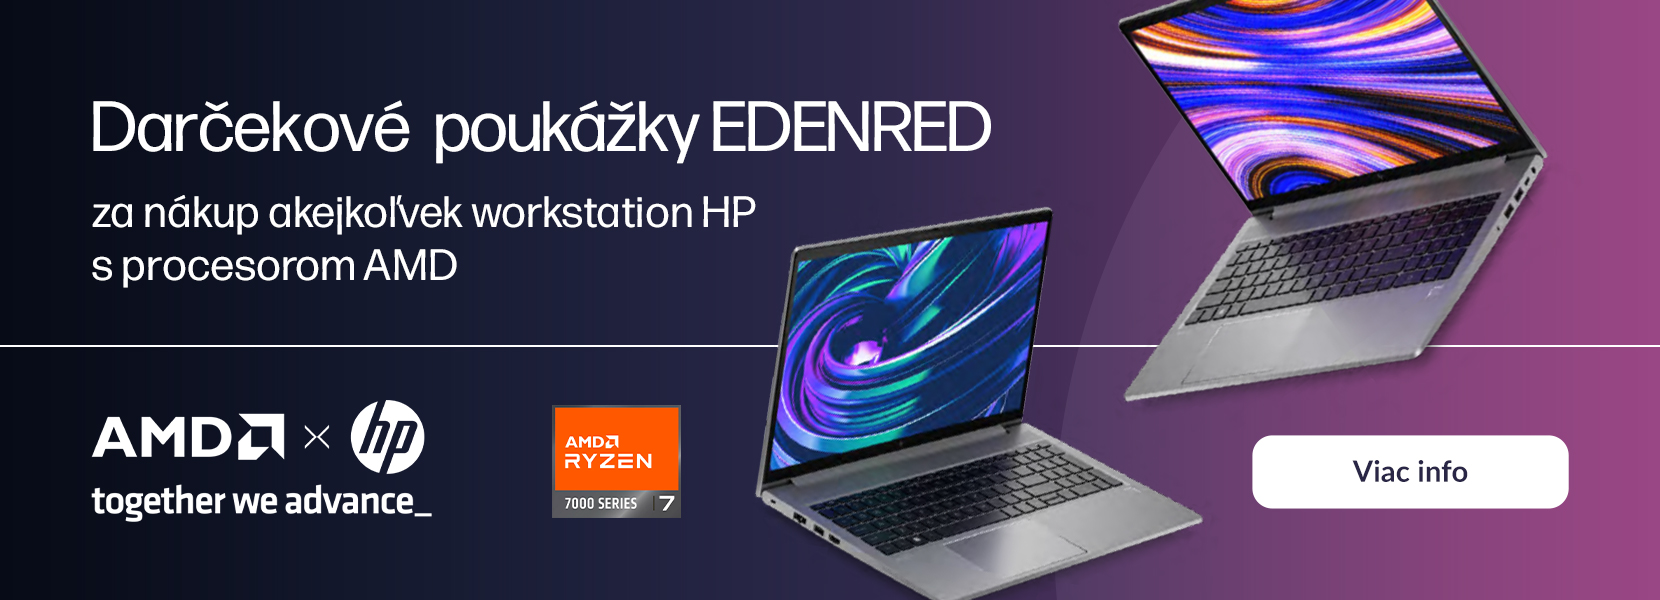 HP notebook workstation s procesorom AMD plus EDENRED poukážka